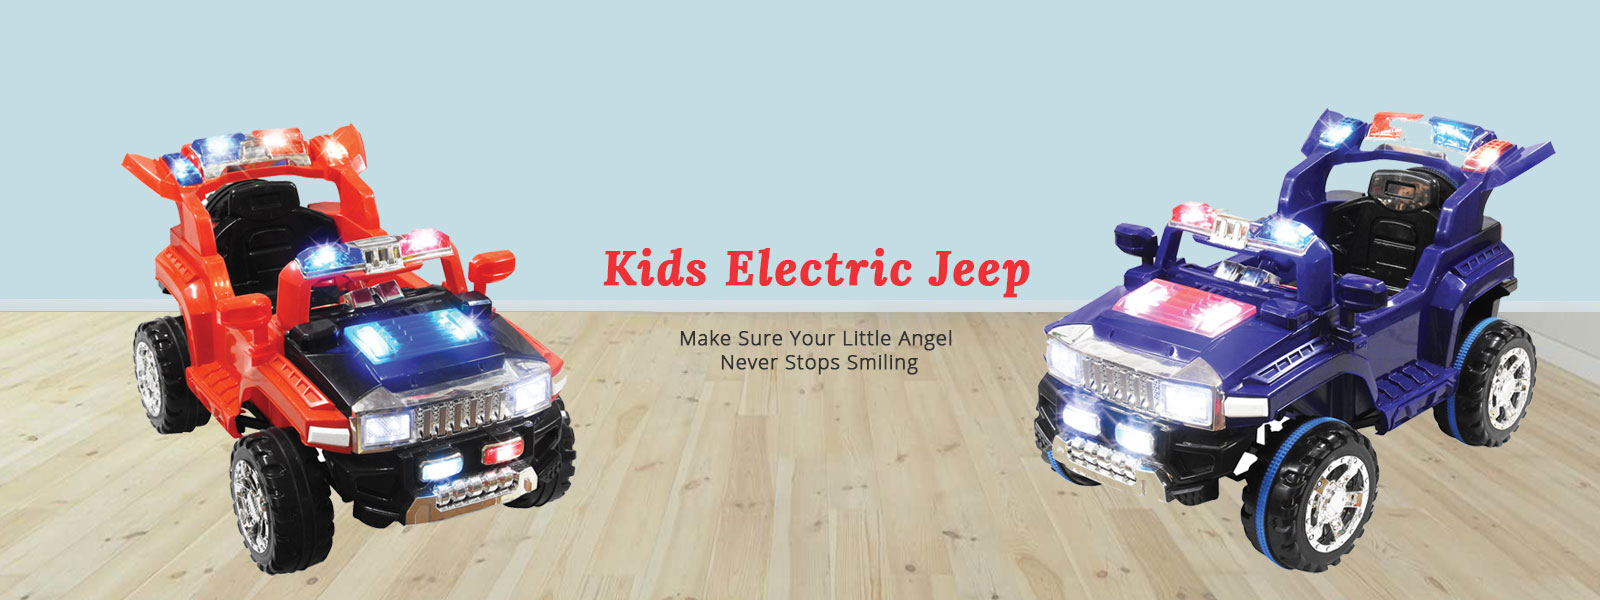 Kids Electric Jeep Manufacturers in Ernakulam